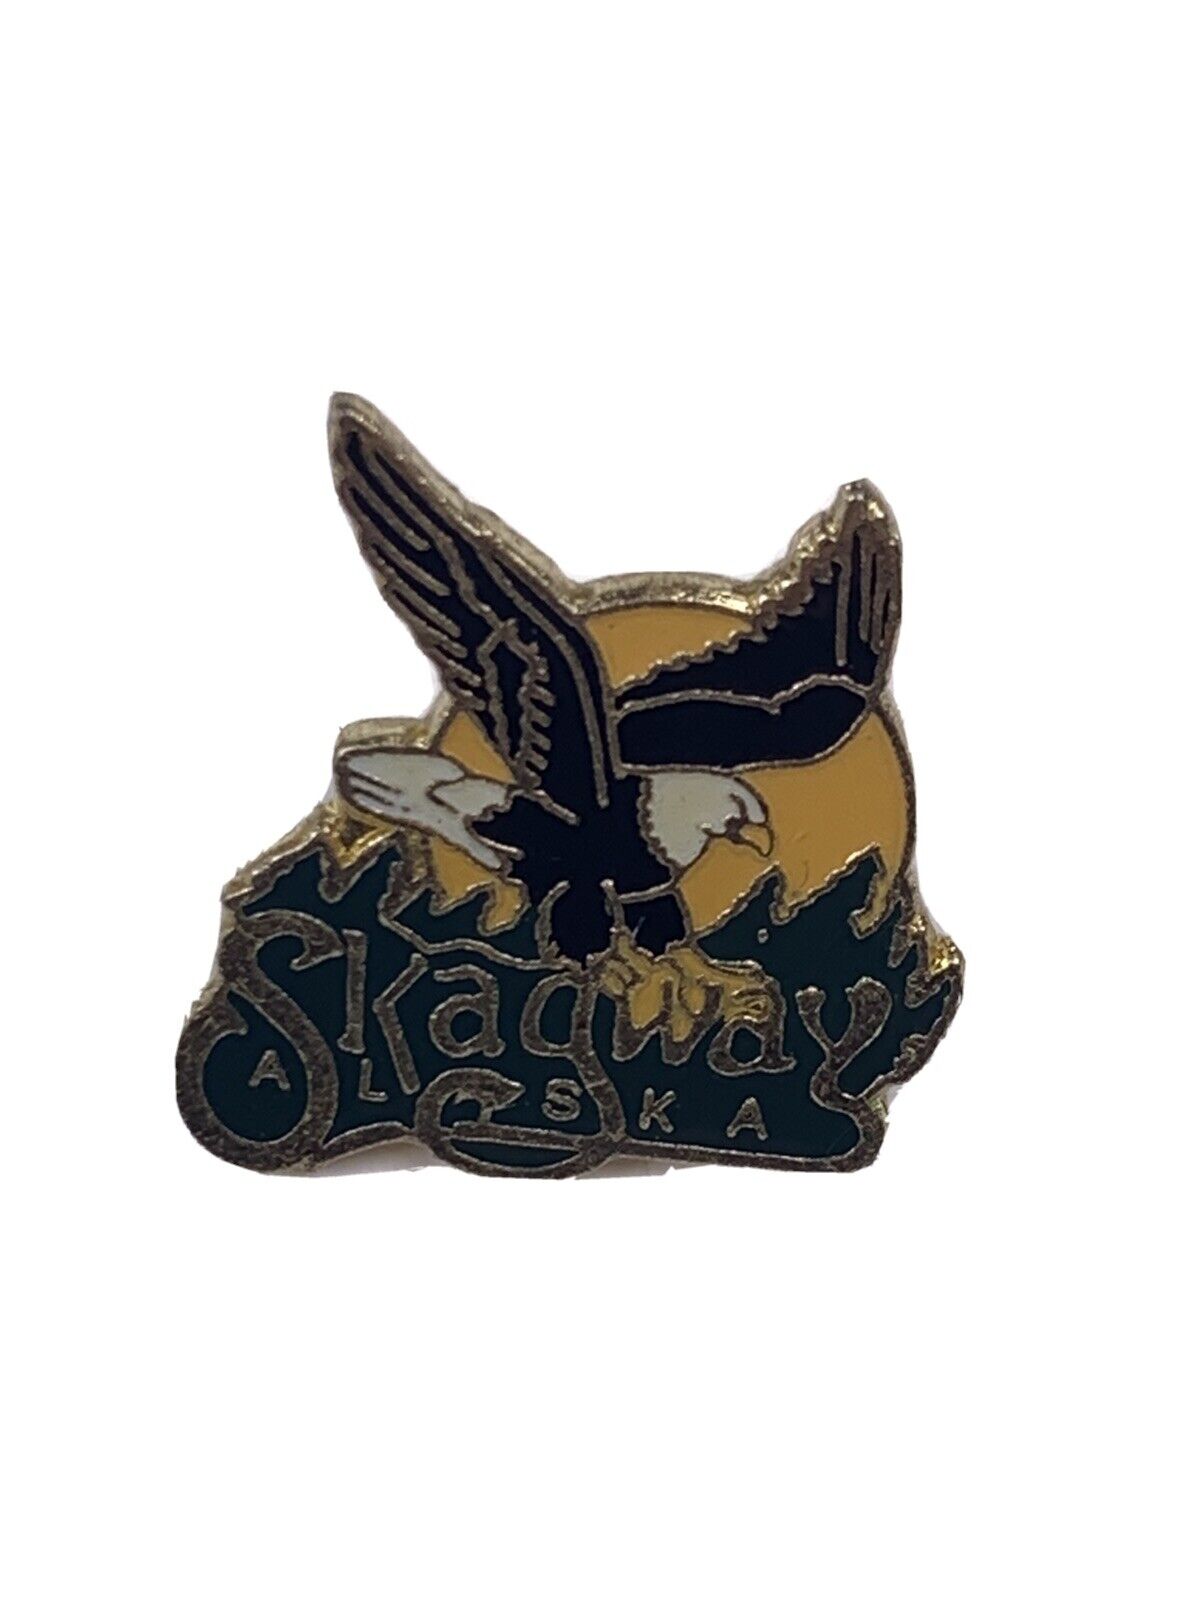 Skagway Alaska Pin